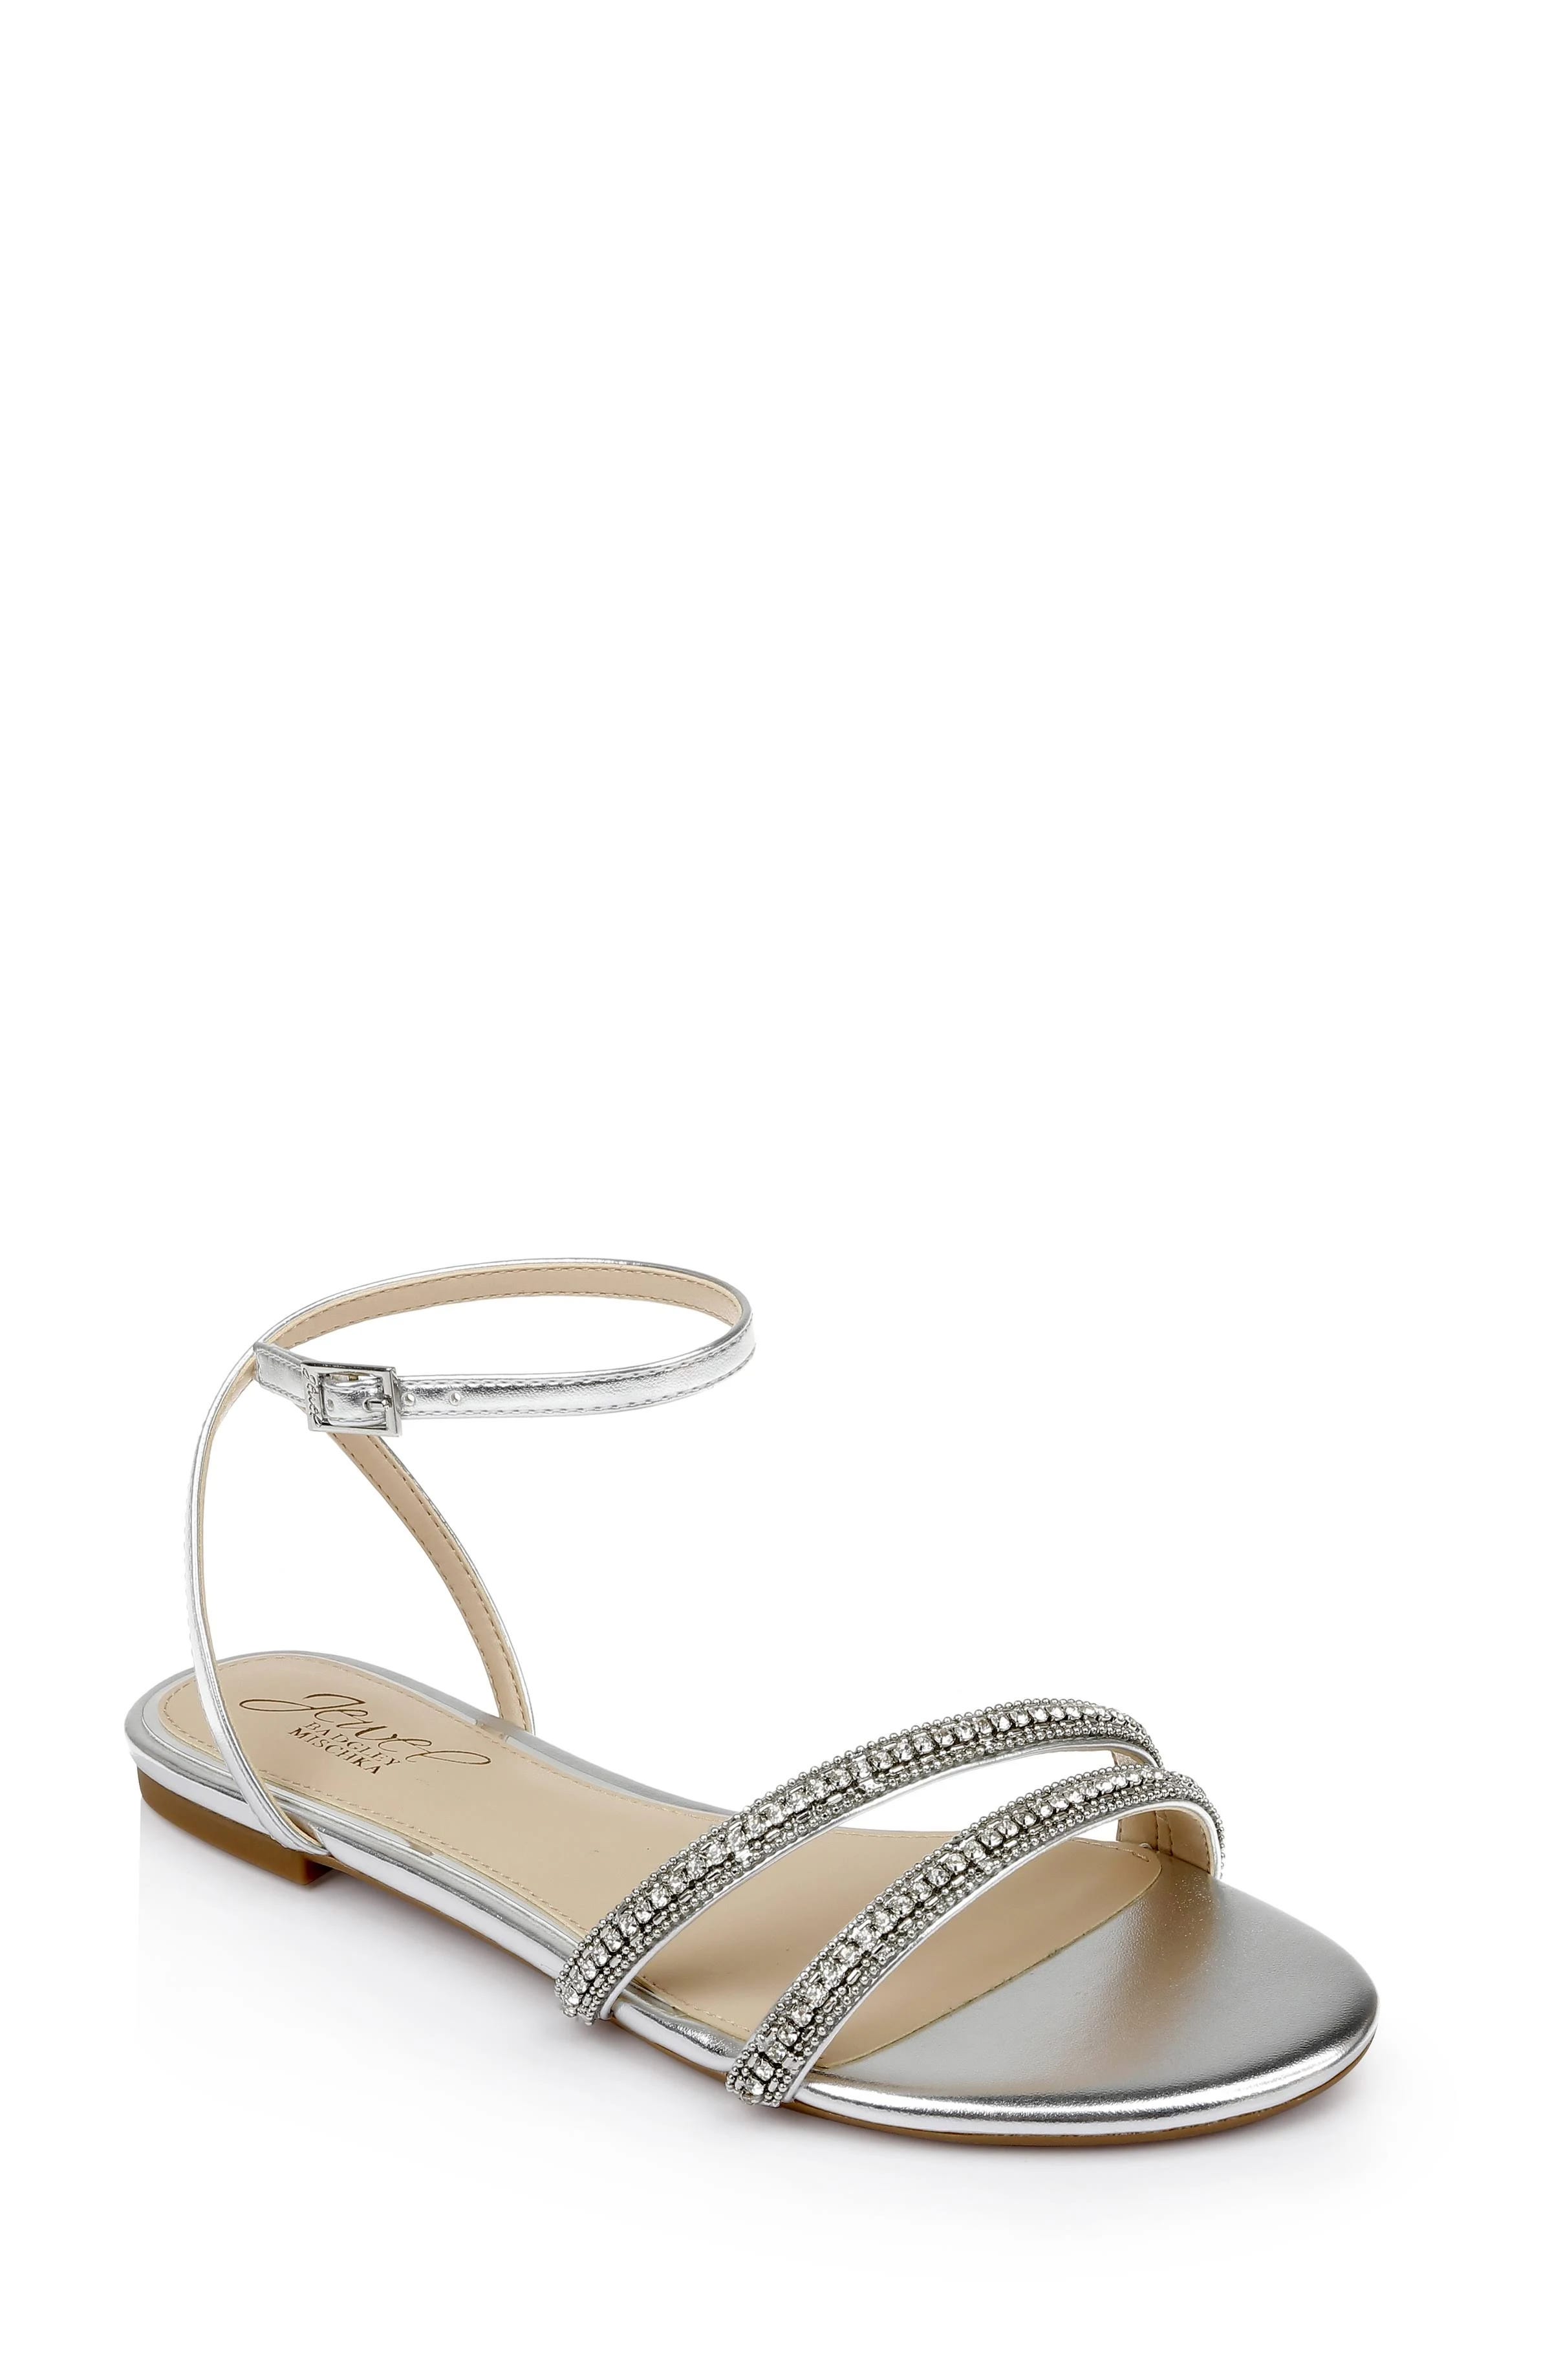 Beautiful Silver Crystal Embellished Sandal | Image